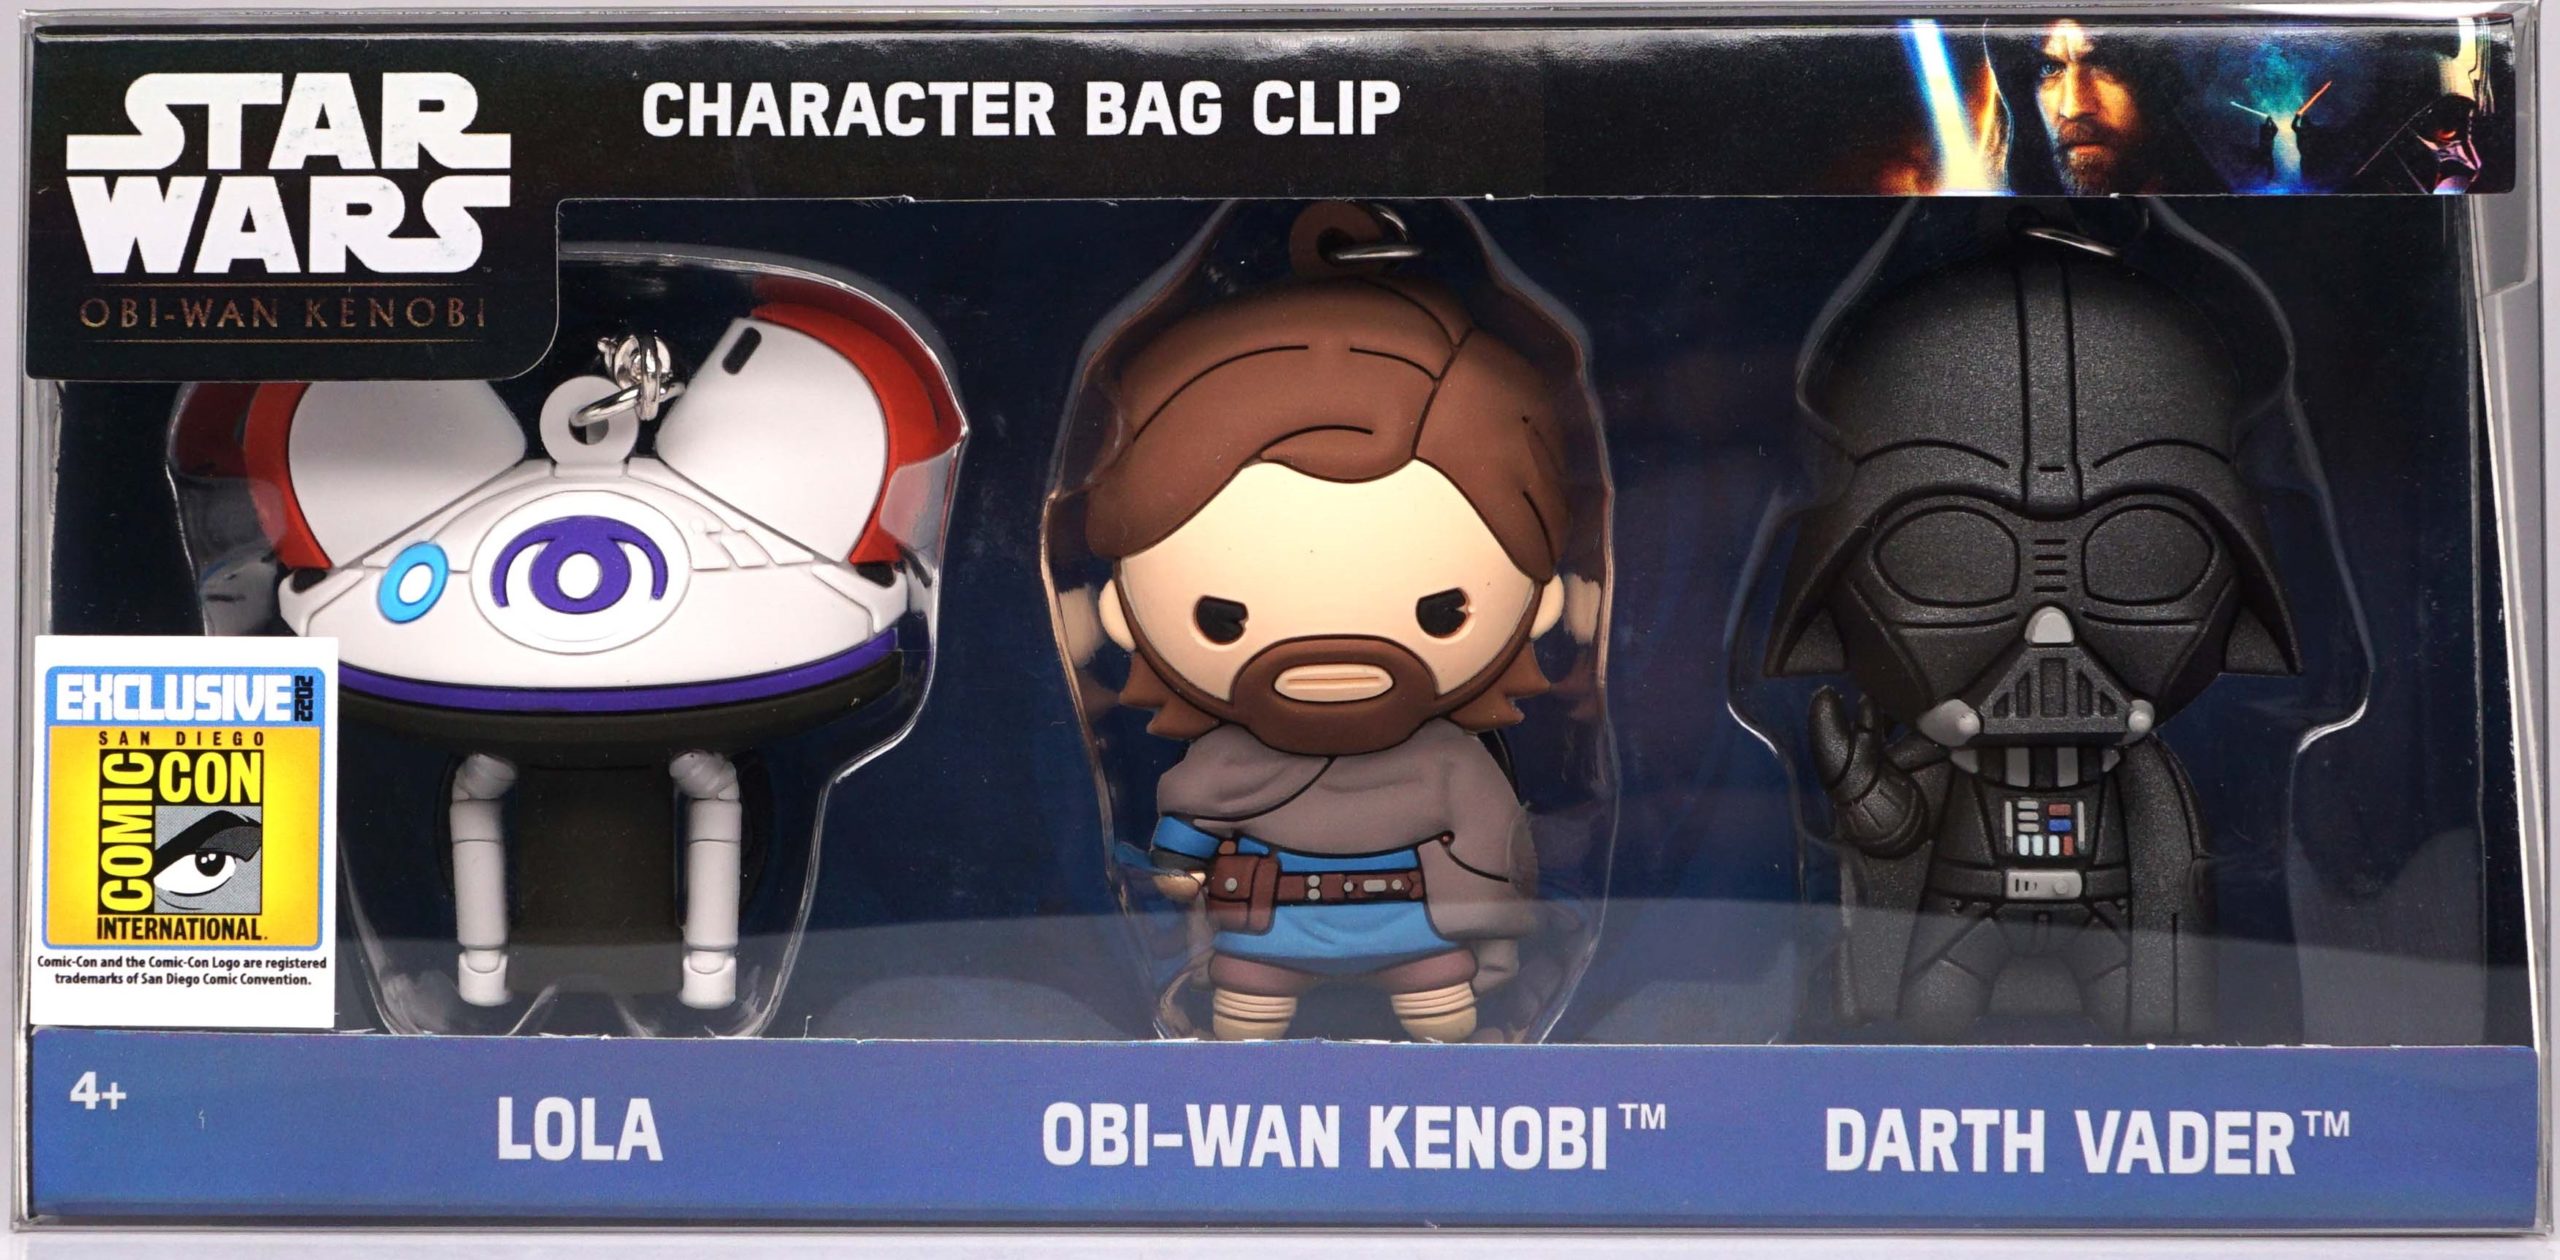 29035 Star Wars Obi Wan Kenobi 3D Foam Bag Clip 3Pc Setsan Diego Comic Con Front 1 Scaled